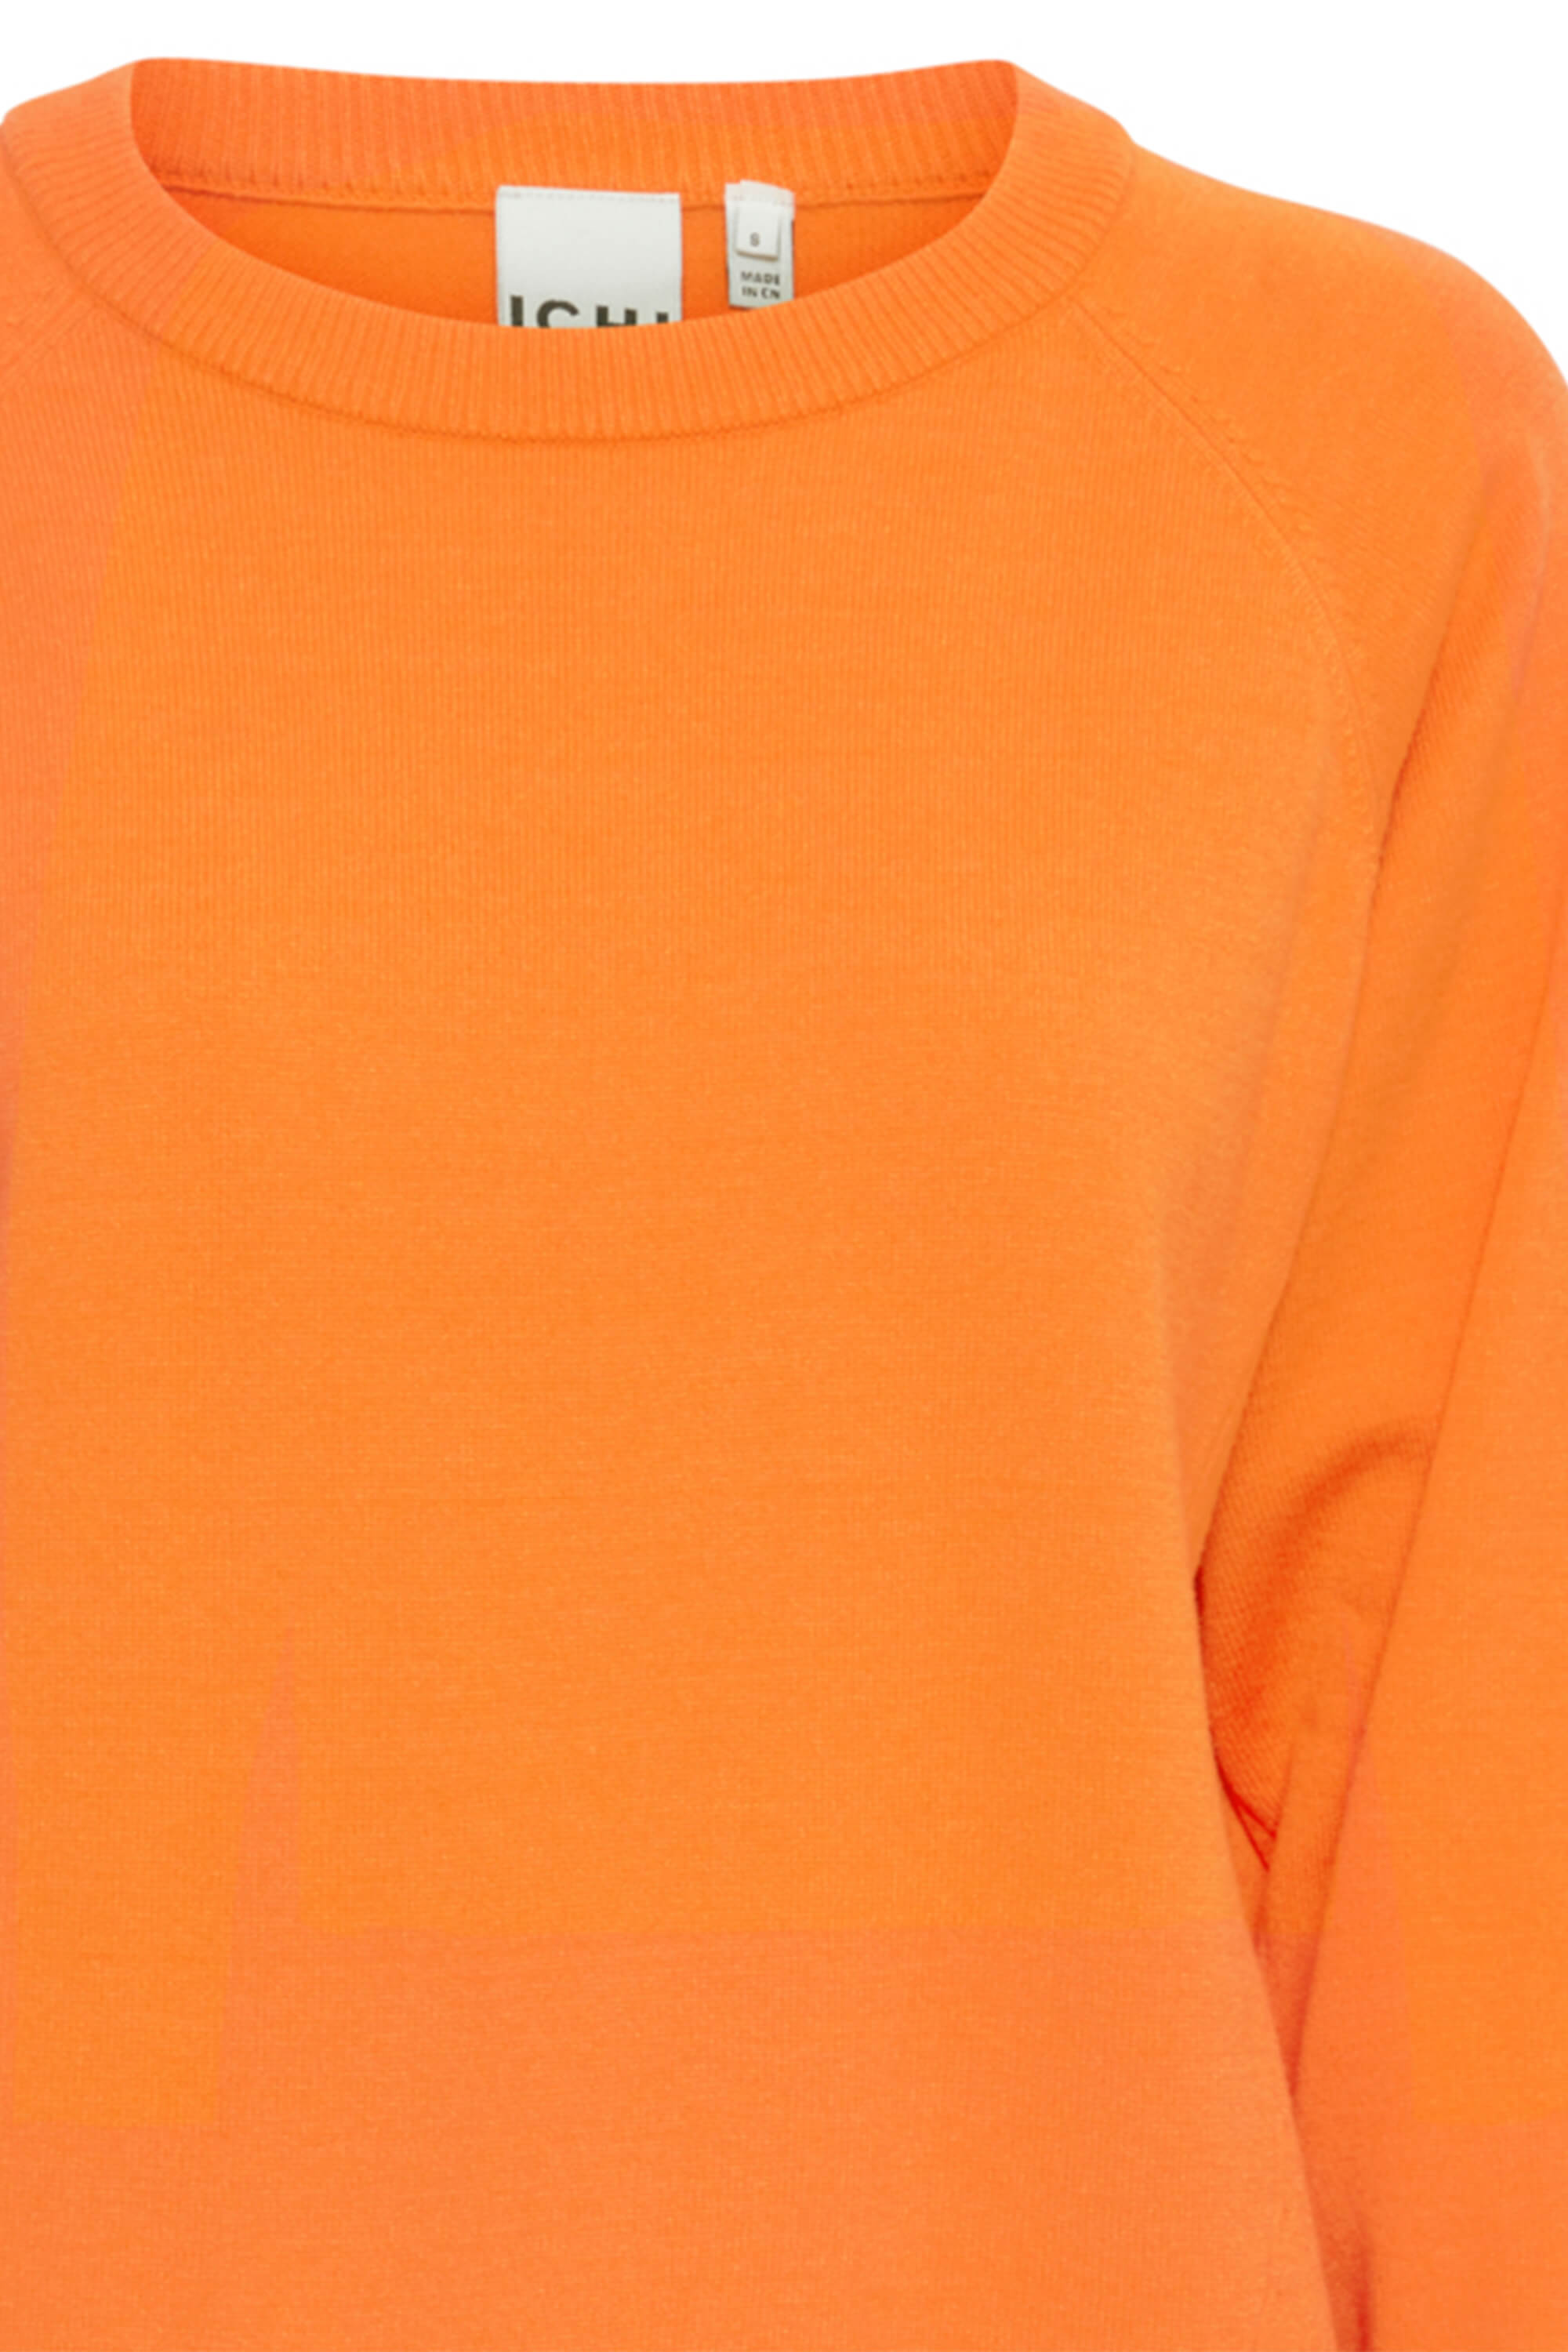 Ichi Boston Knit Pullover Orange